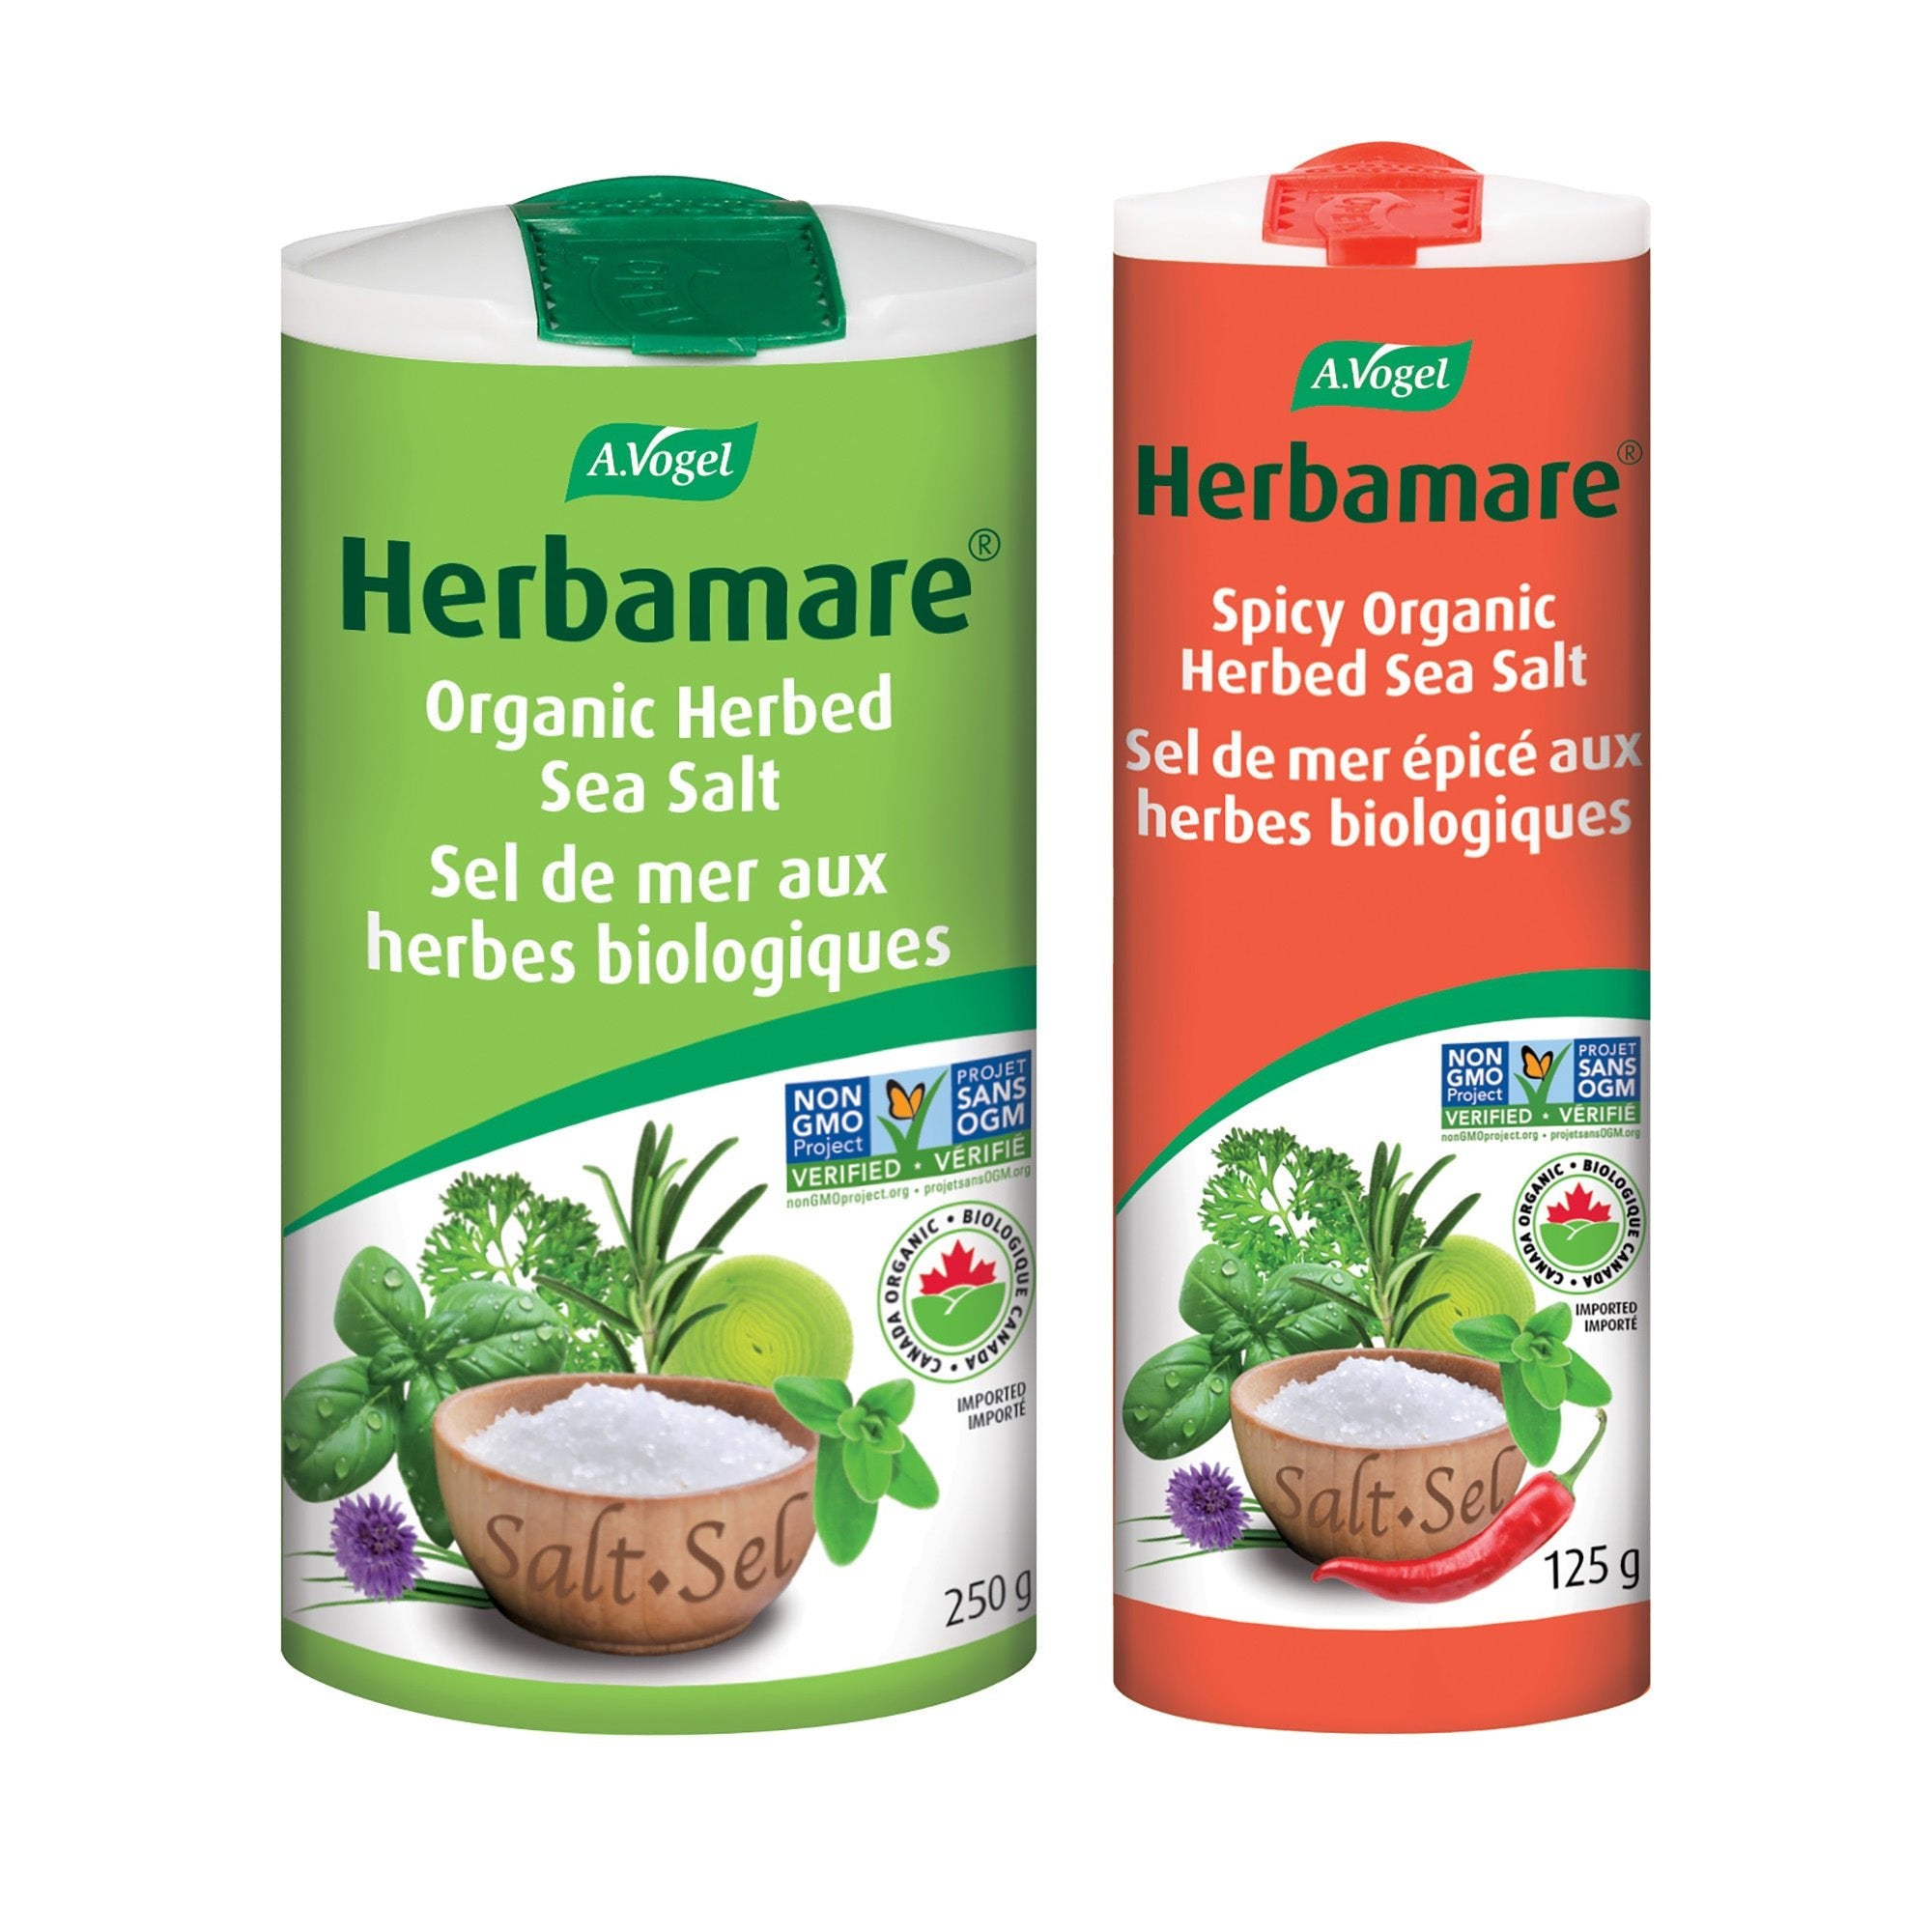 A. Vogel Herbamare. Original, Spicy and Low Salt.